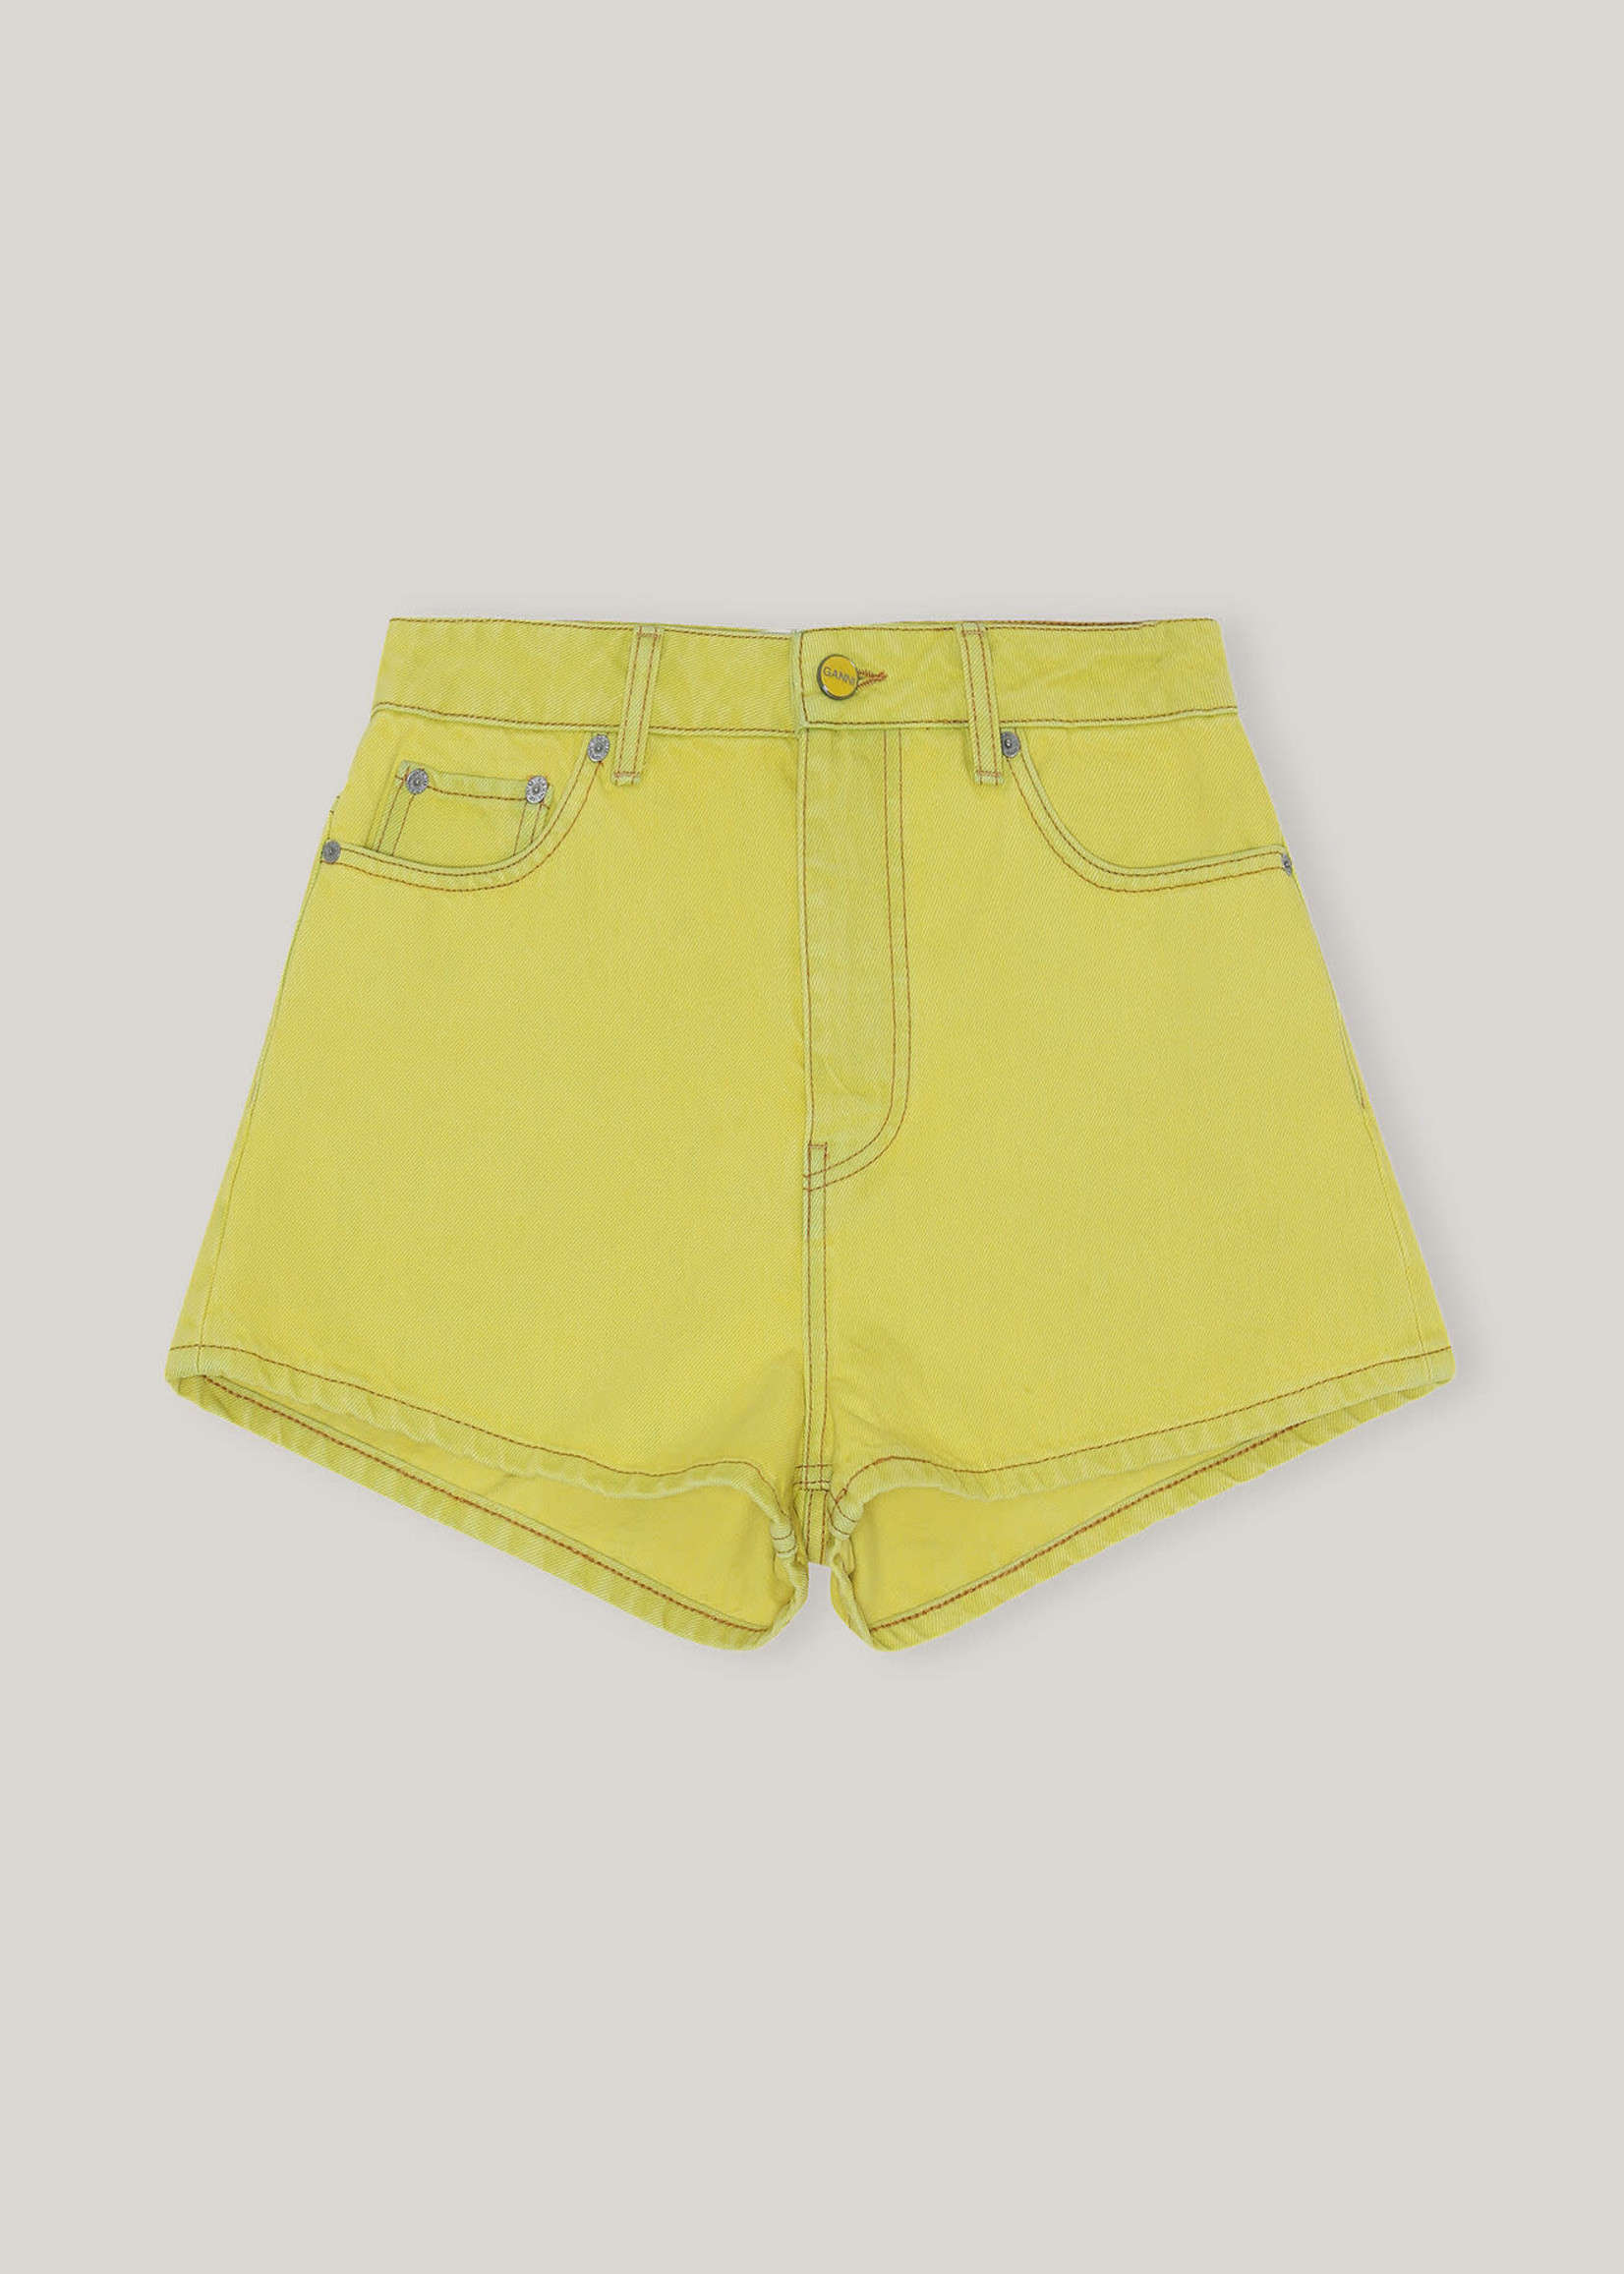 GANNI Denim High Waisted Shorts in Blazing Yellow